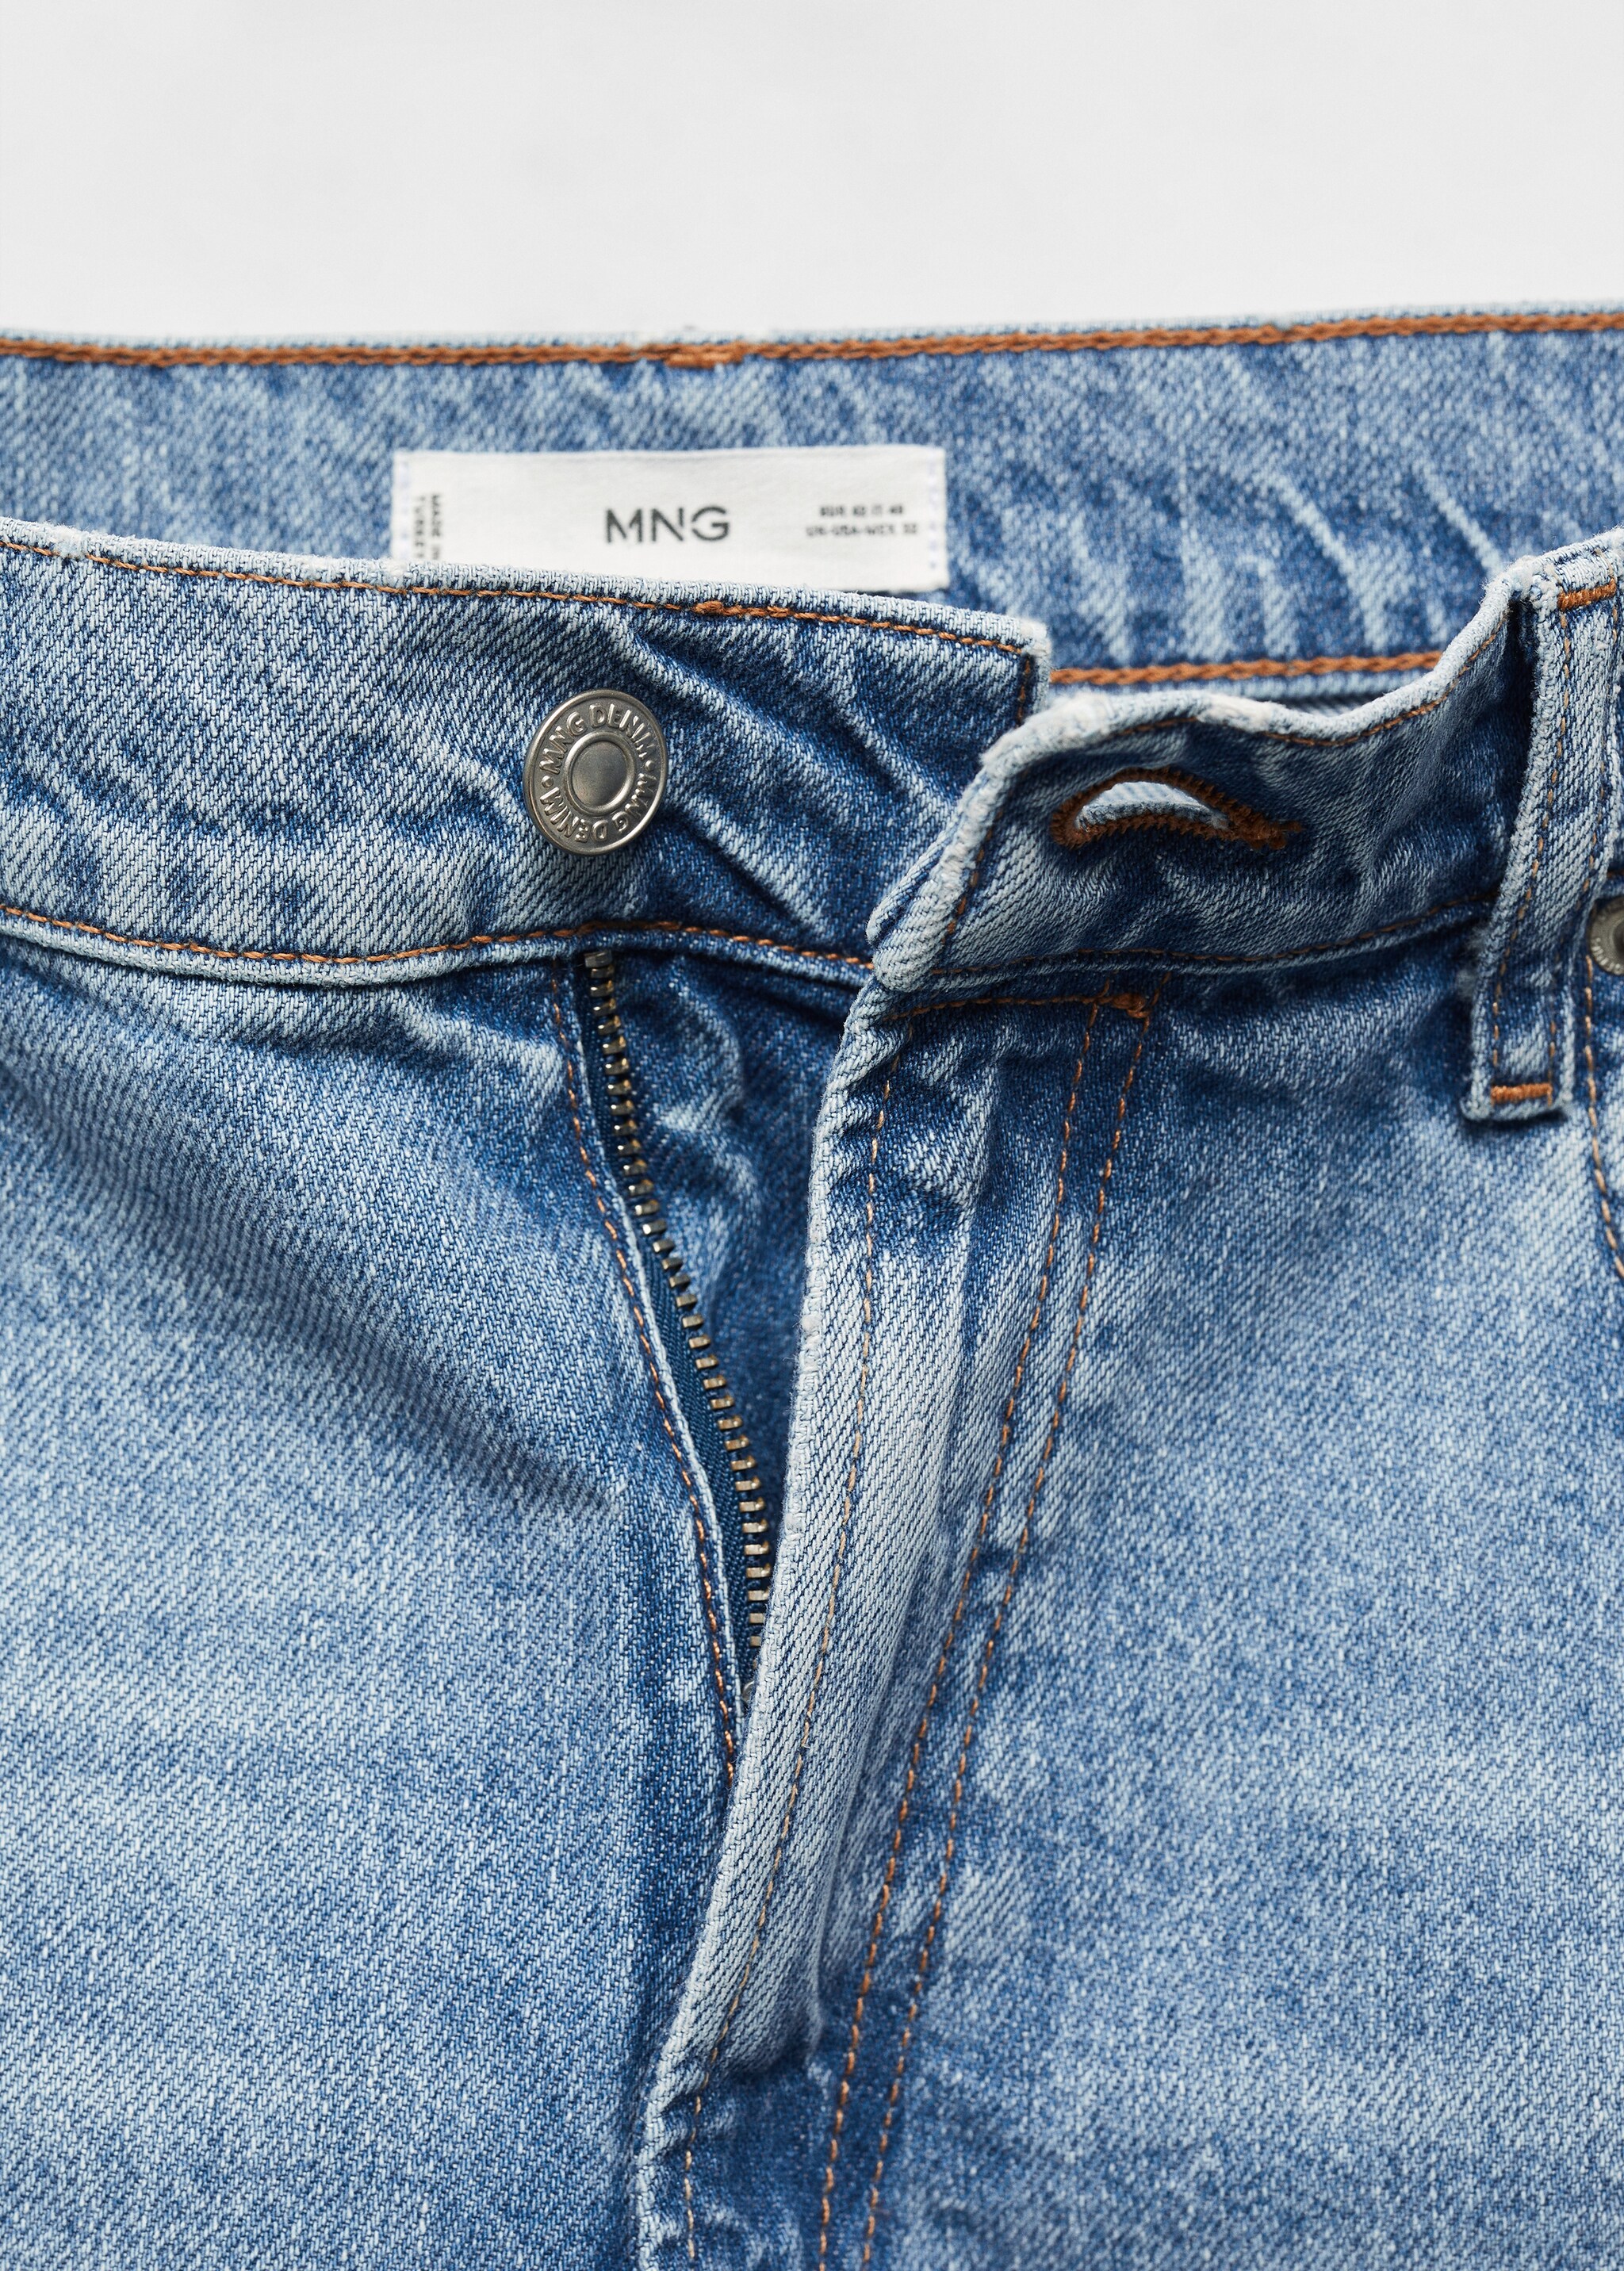 Regular fit medium wash jeans - Details of the article 8